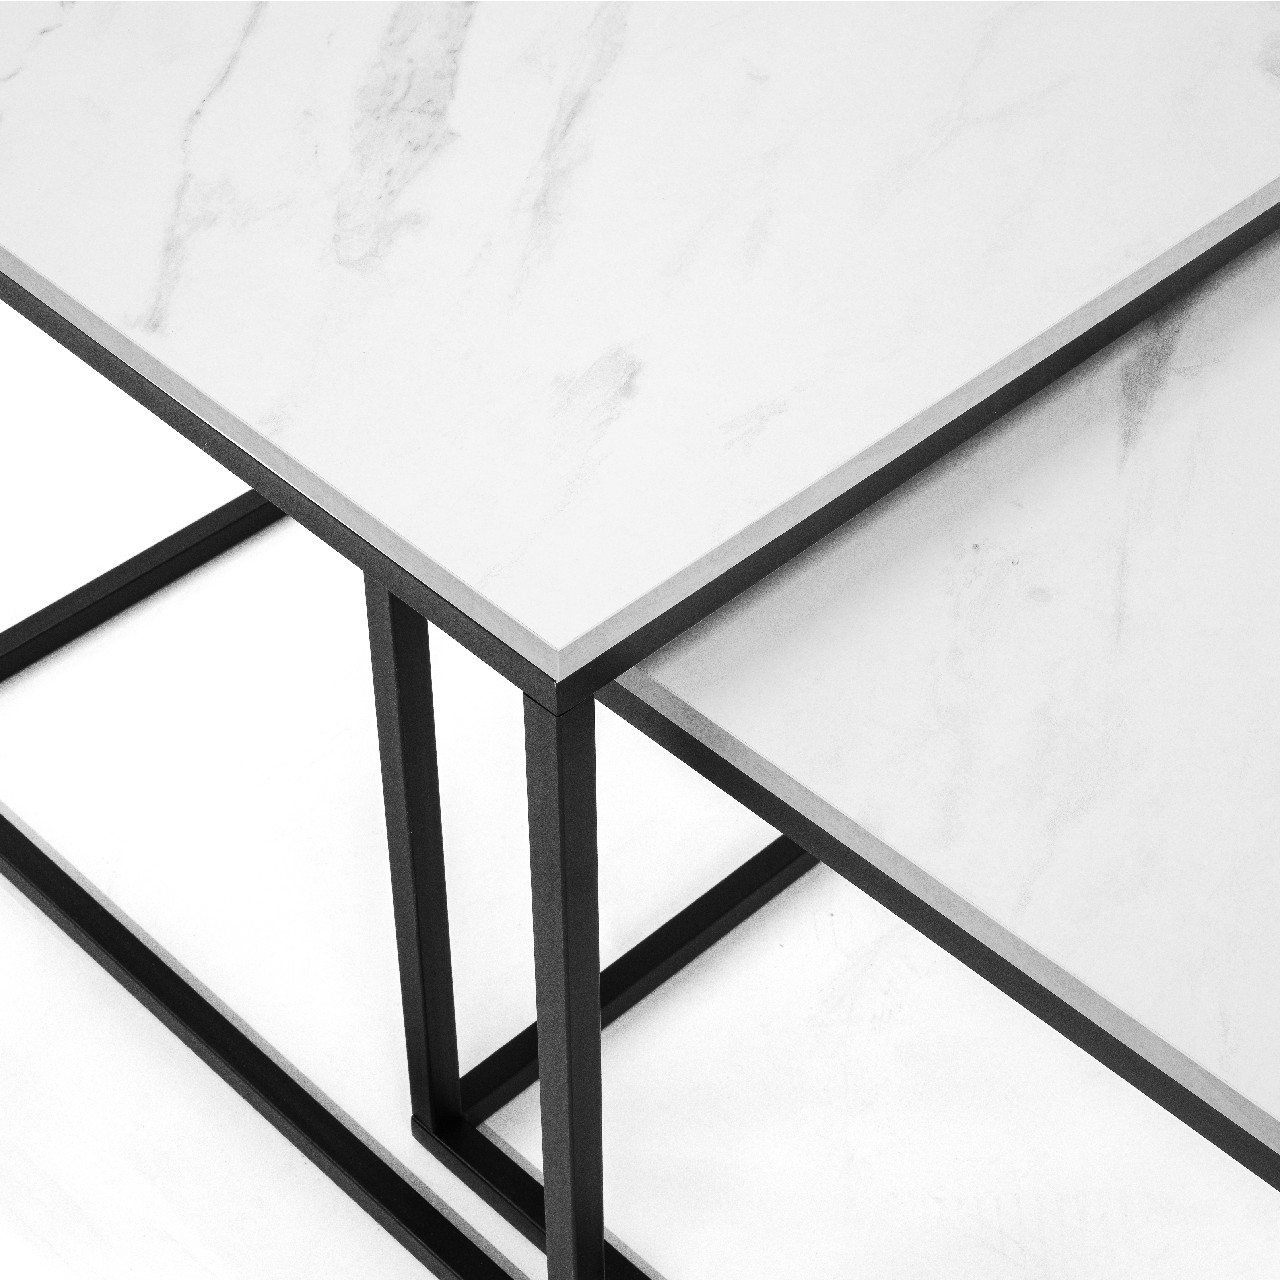 2 Piece Coffee Table Set VEROLI VR06 black / white marble